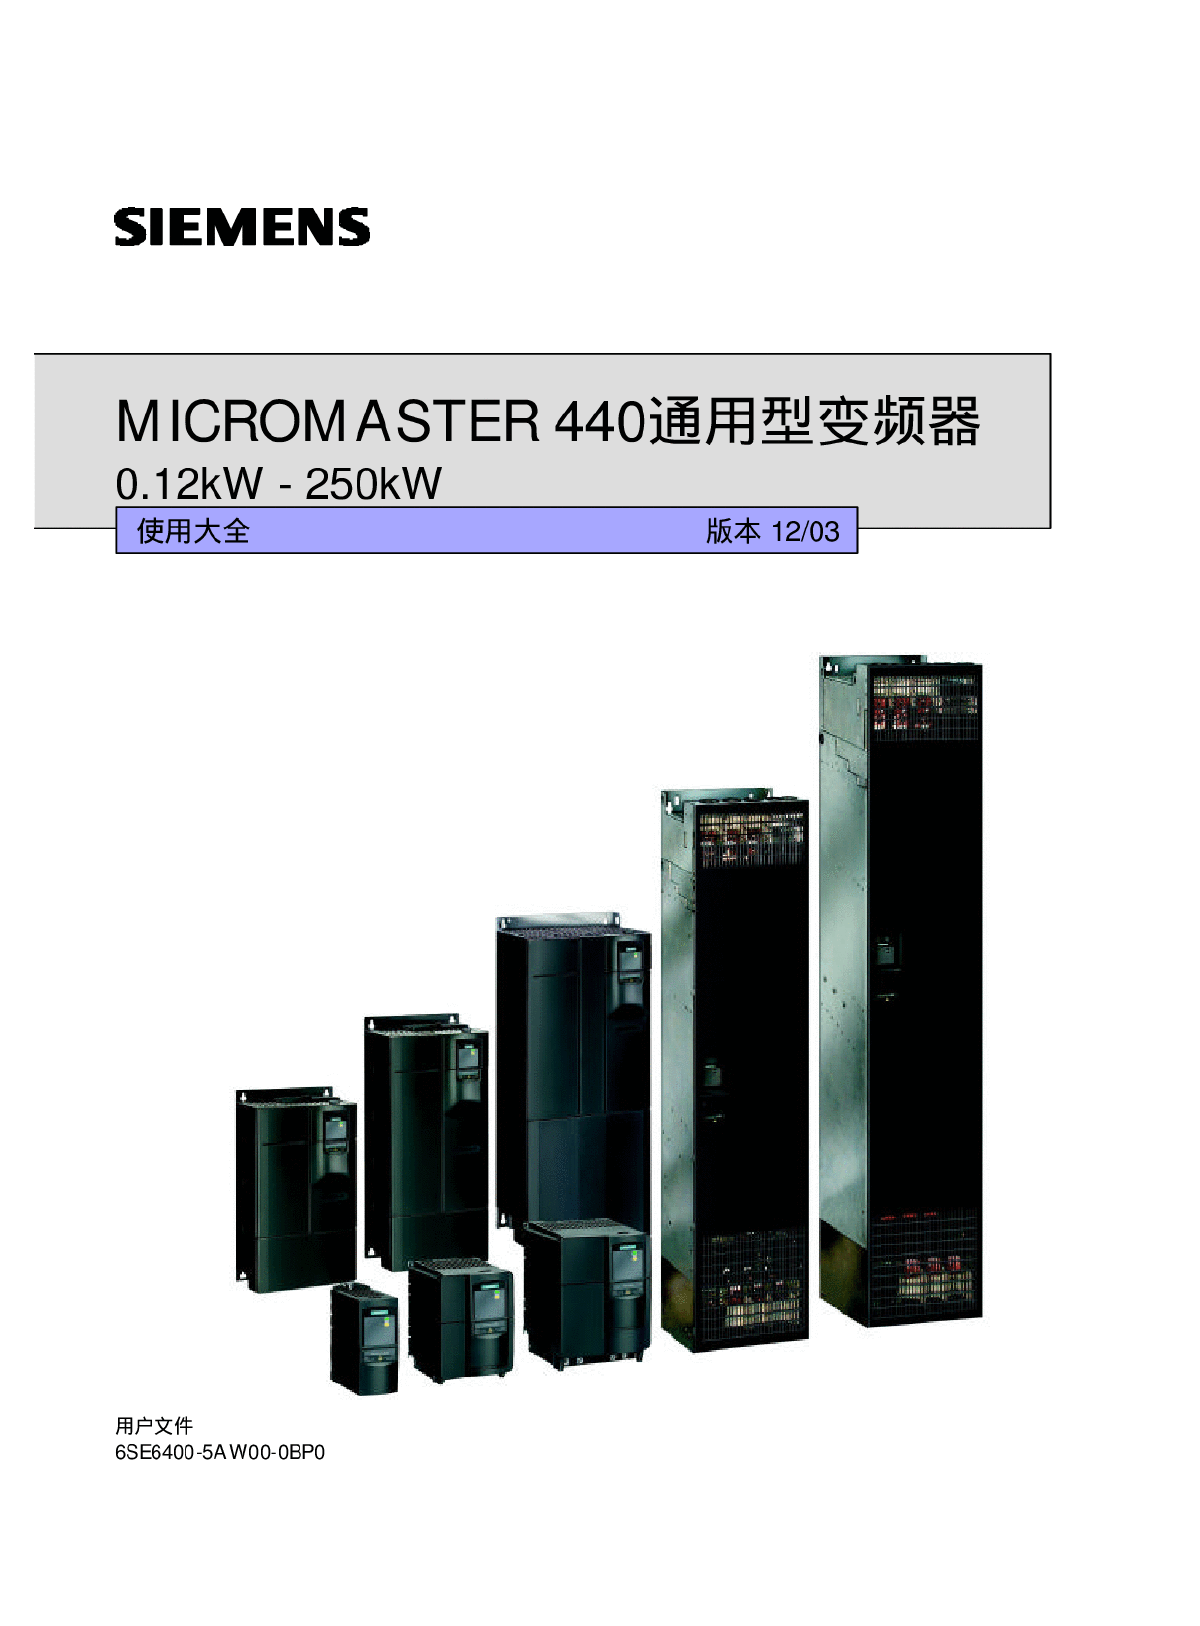 【PDF】西门子通用变频器MM440操作手册及使用大全-图一